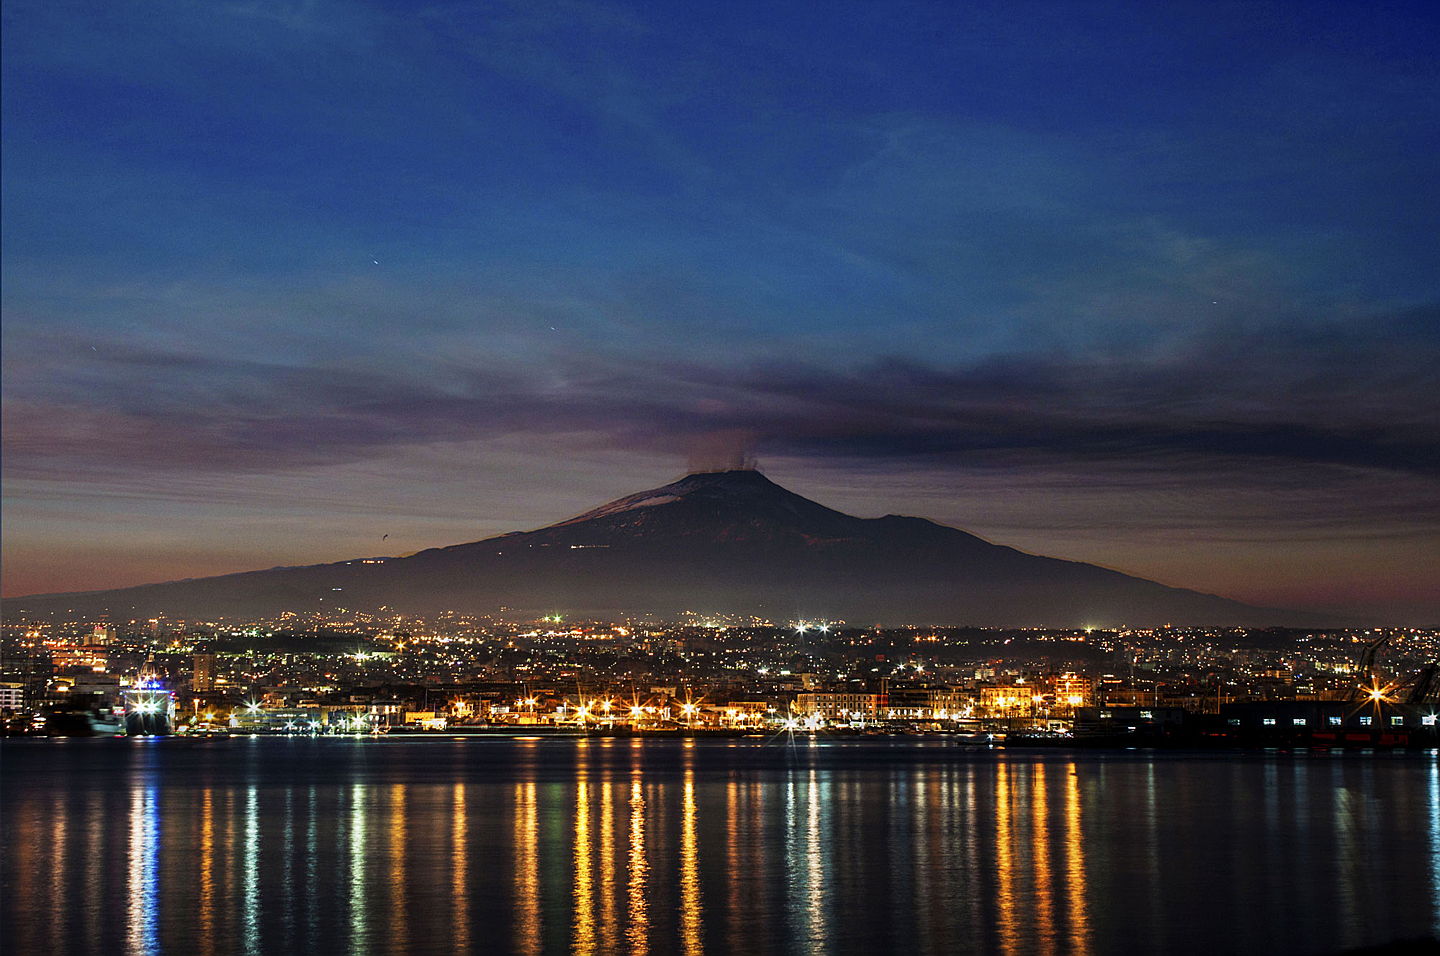  Catania
- catania-dal-mare.jpg